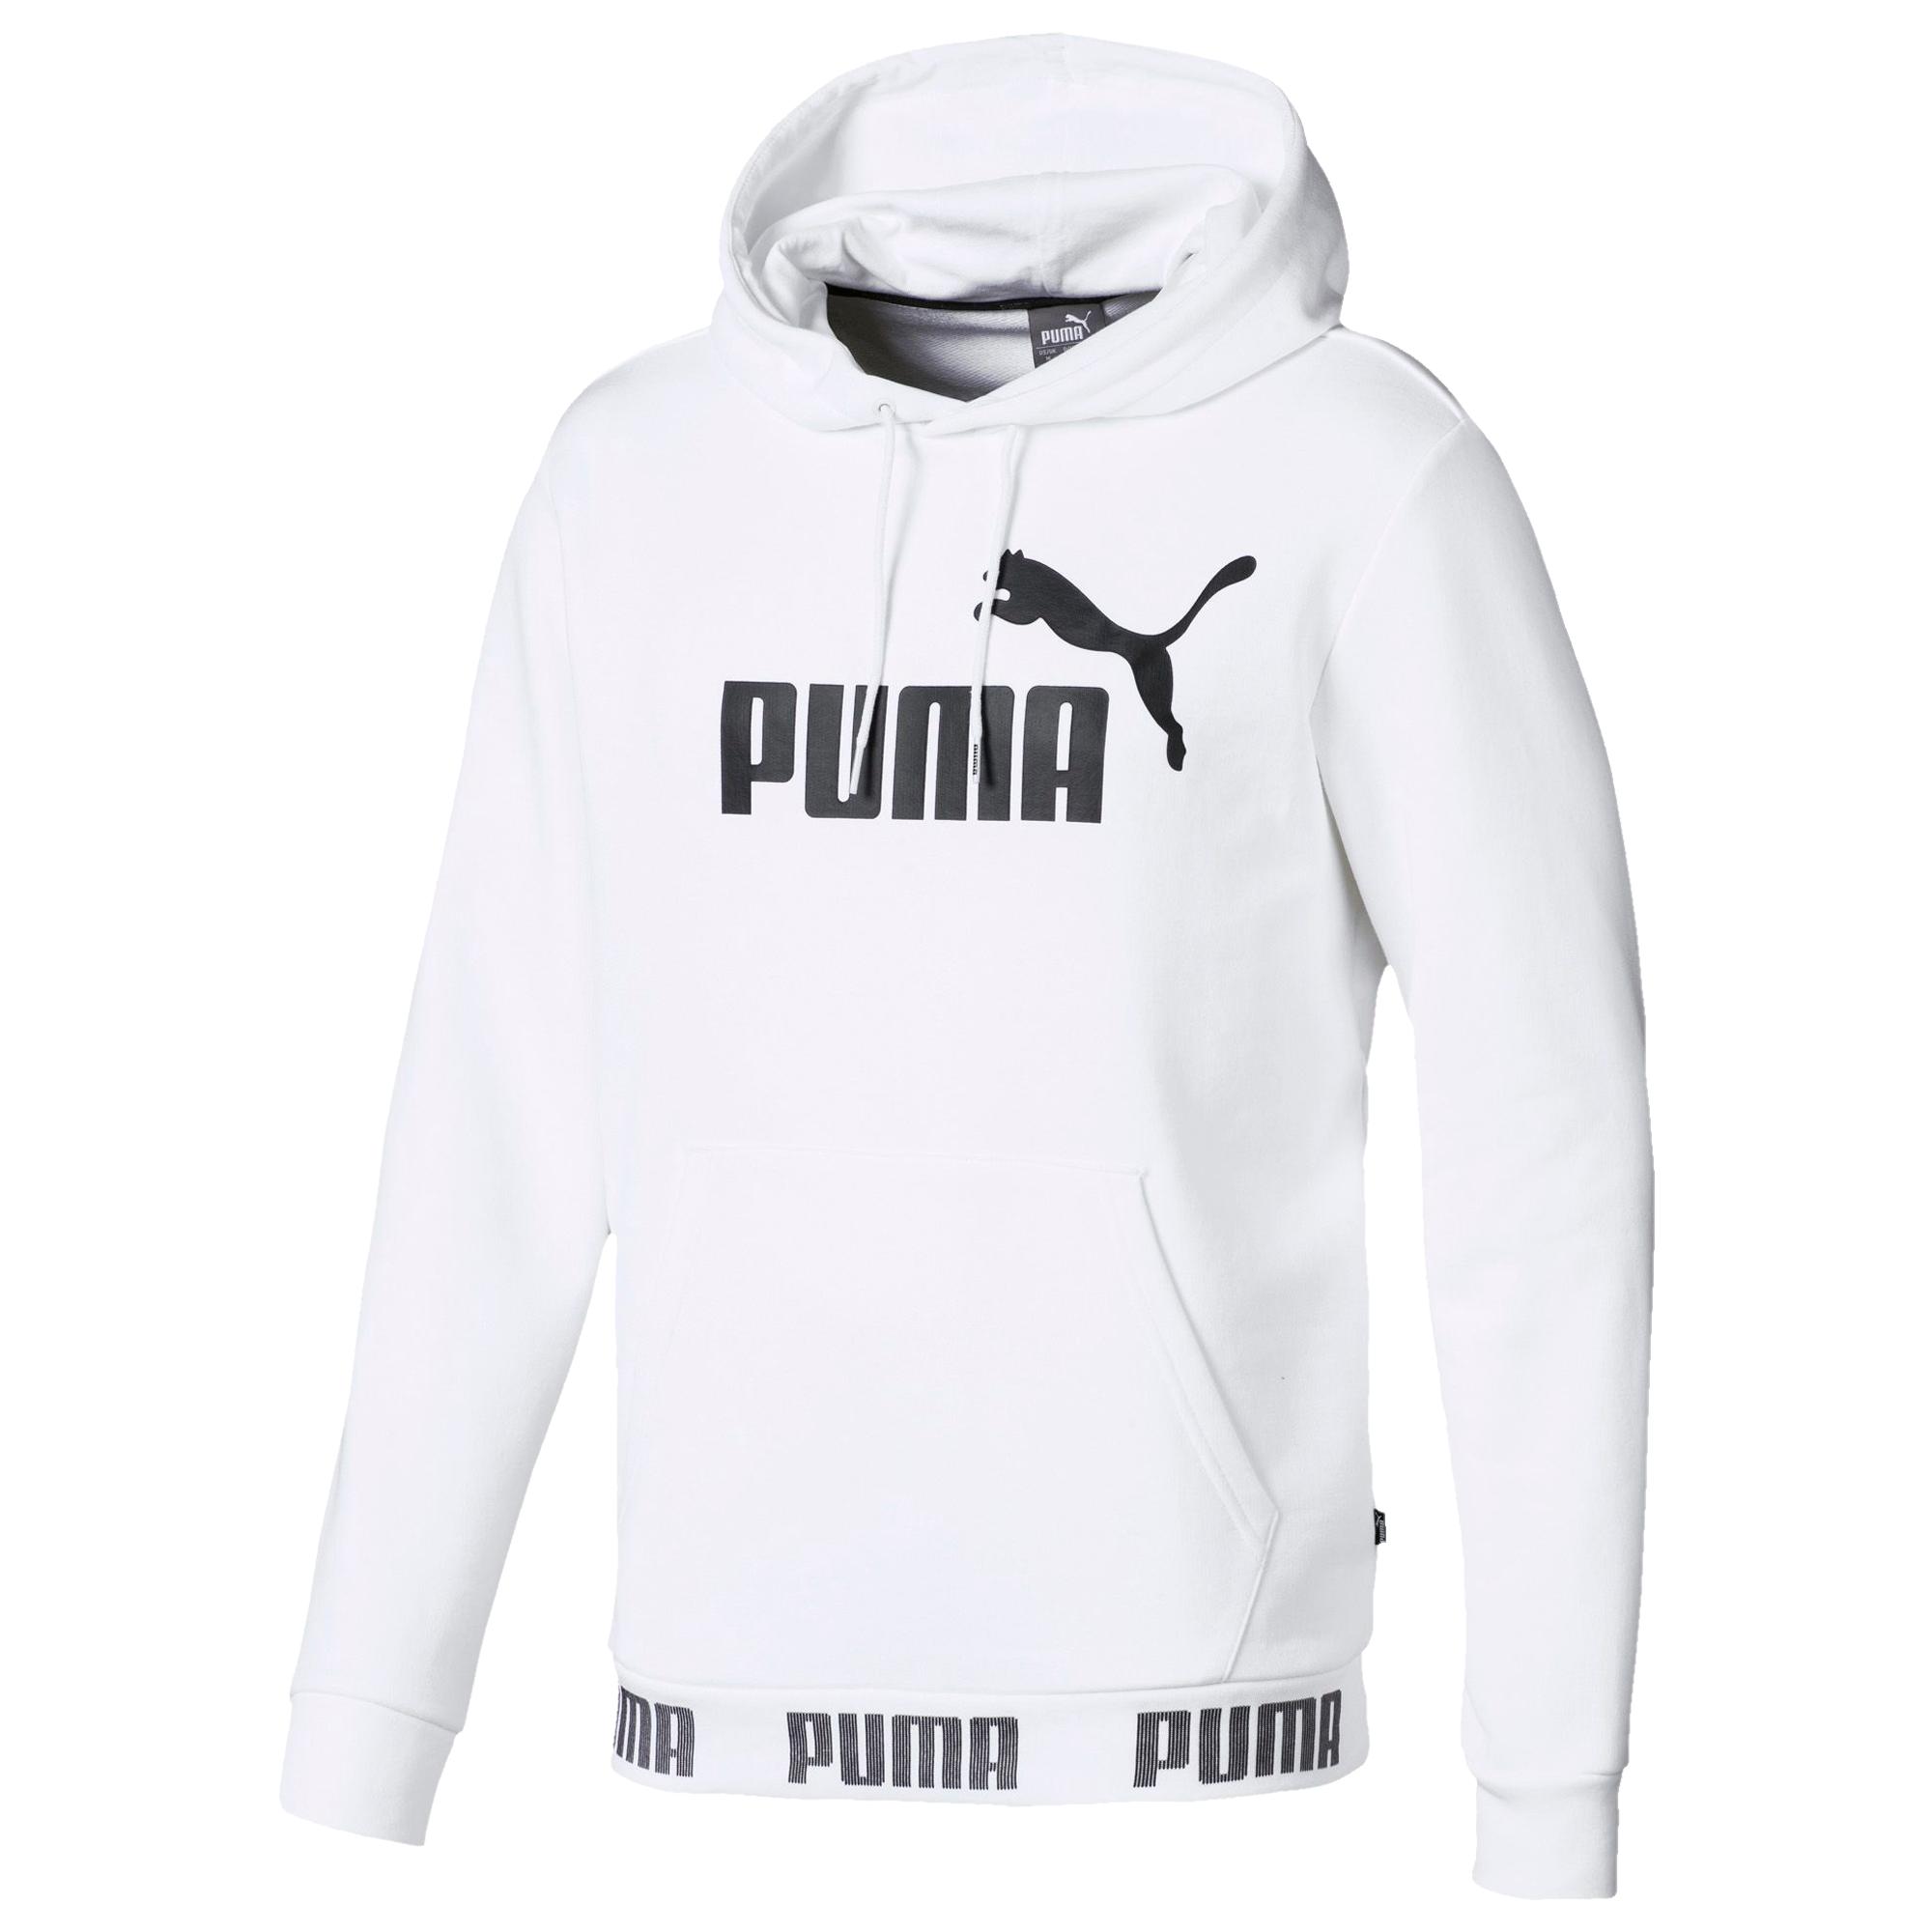 puma sweatshirt white